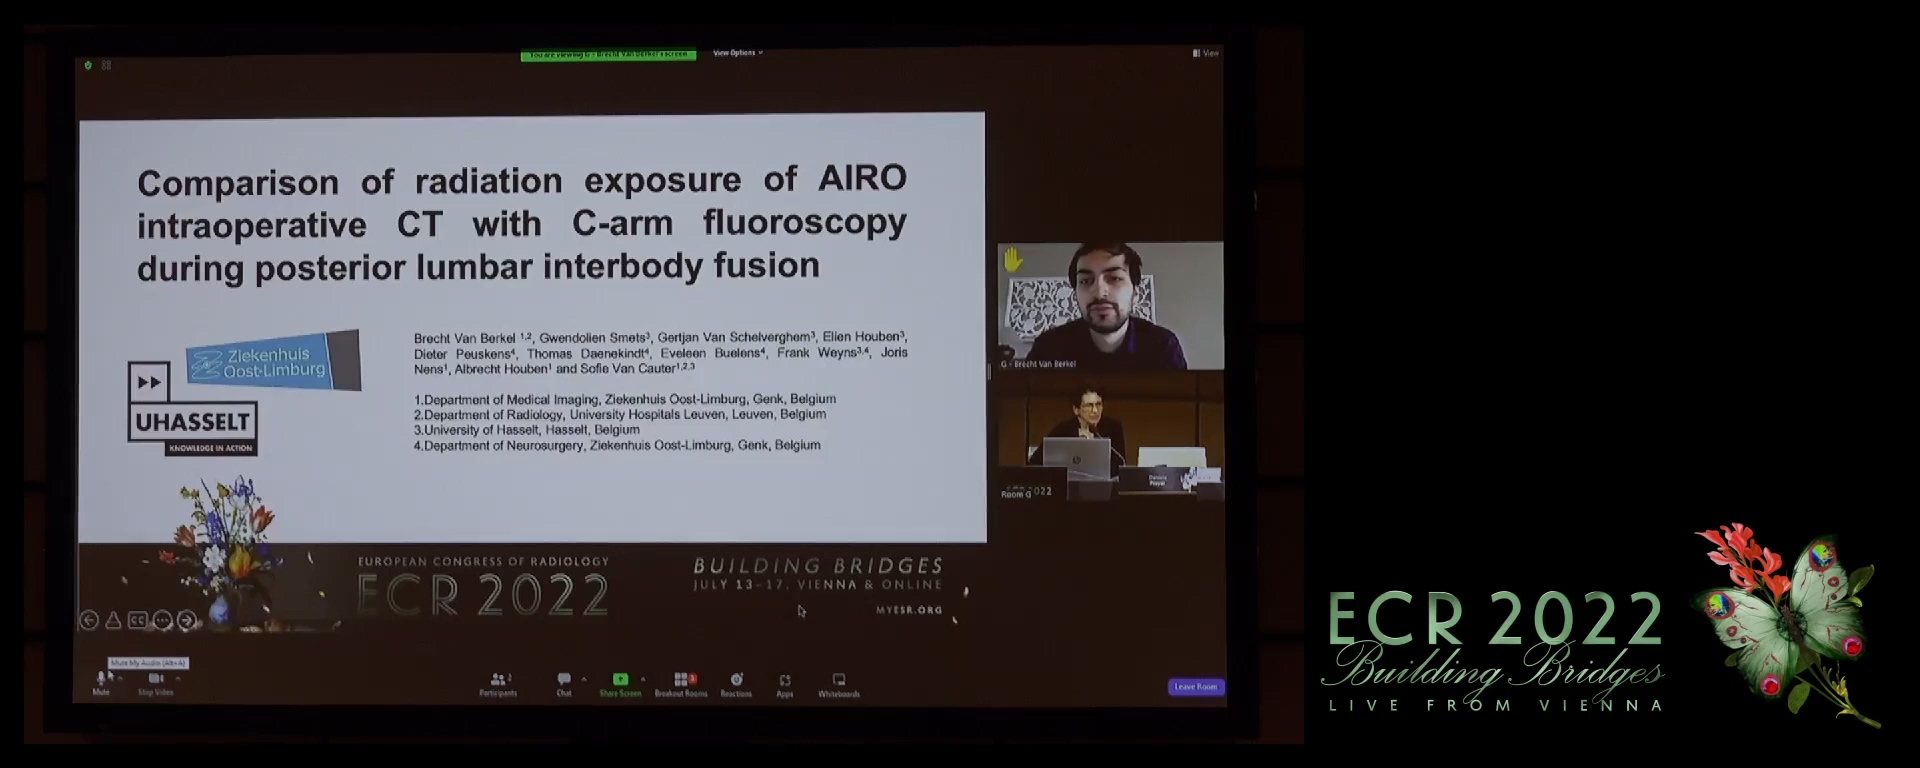 Comparison of radiation exposure of AIRO intraoperative CT with C-arm fluoroscopy during posterior lumbar interbody fusion